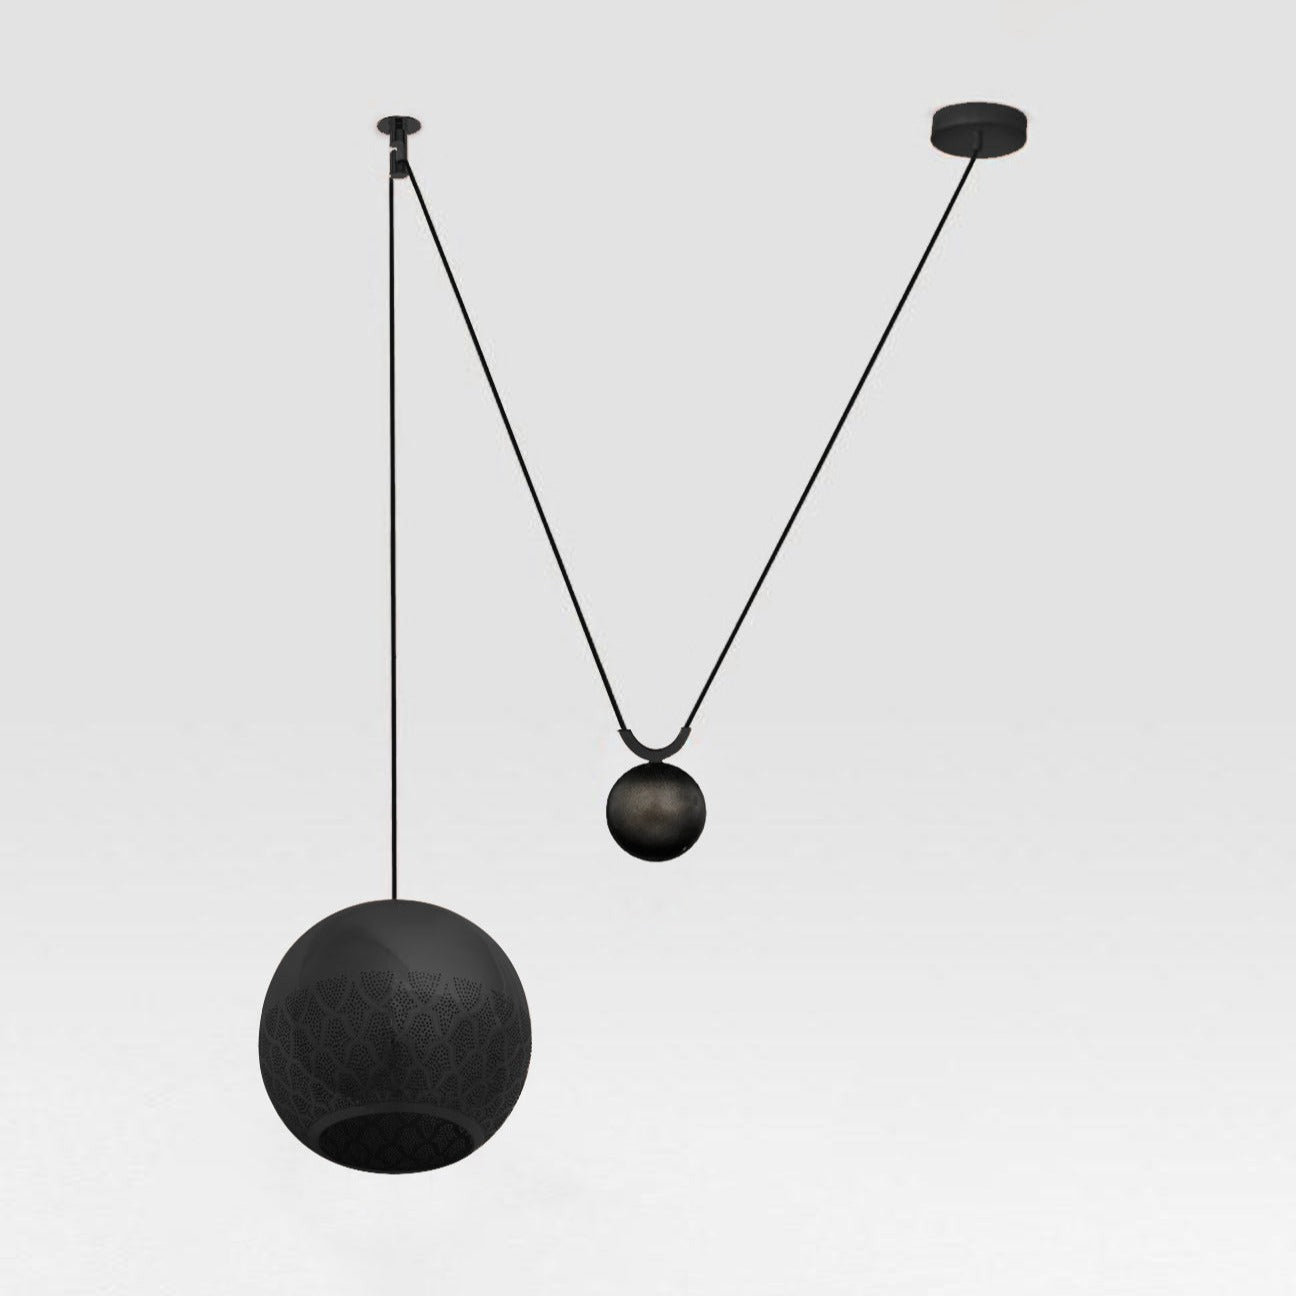 Sphere Counter-balance Weight Kit